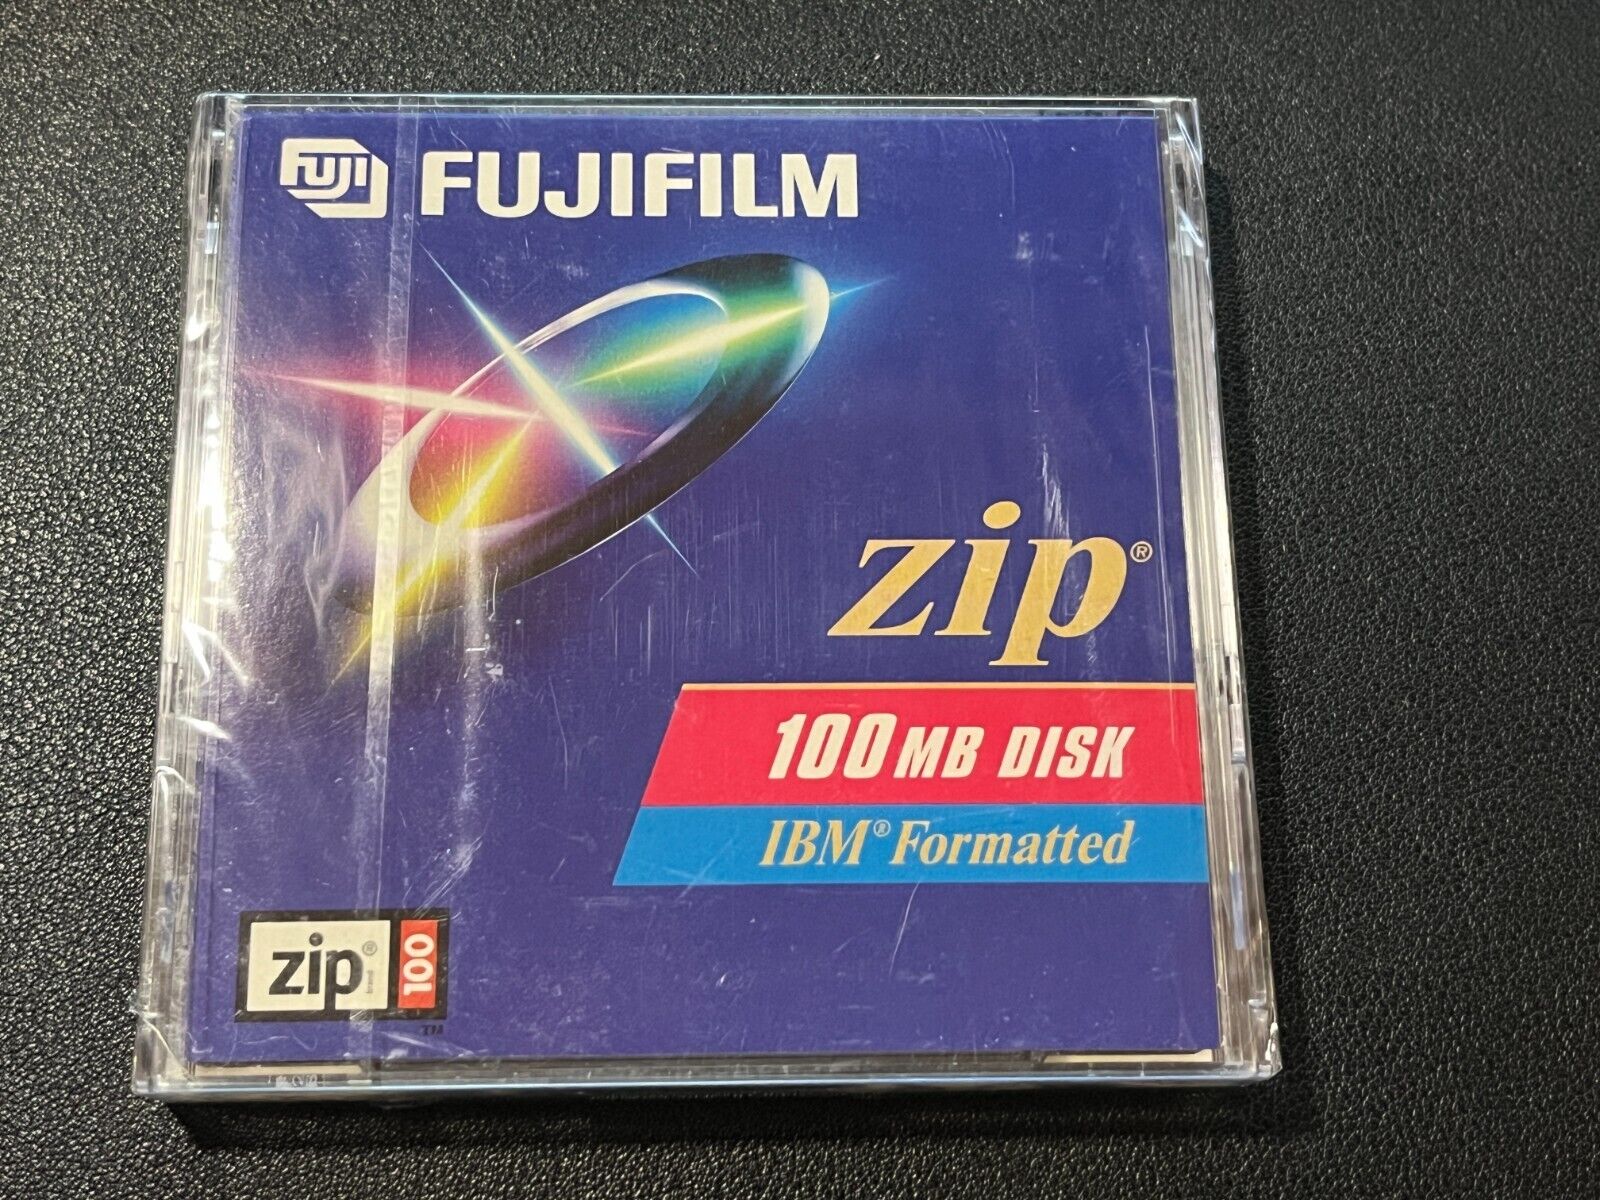 Fujifilm Zip 100mb Disk IBM Formatted New Sealed